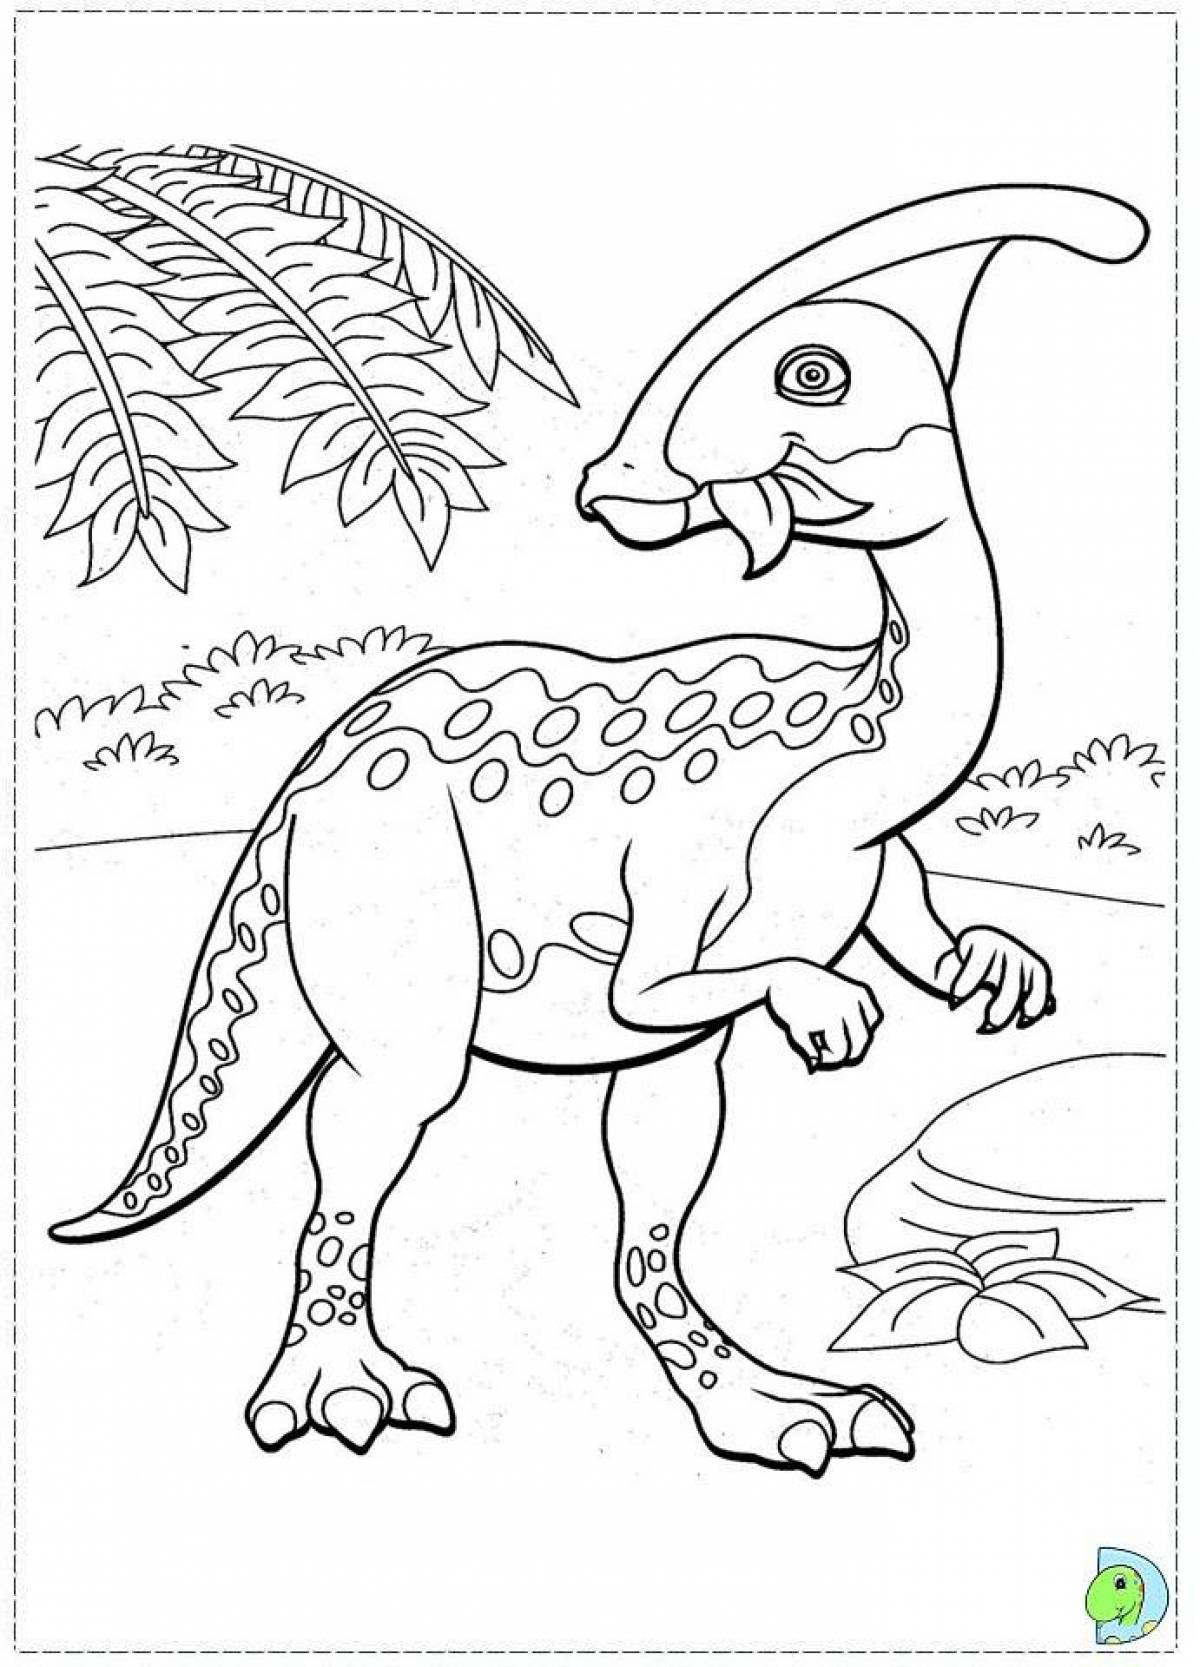 Dinosaur bright coloring